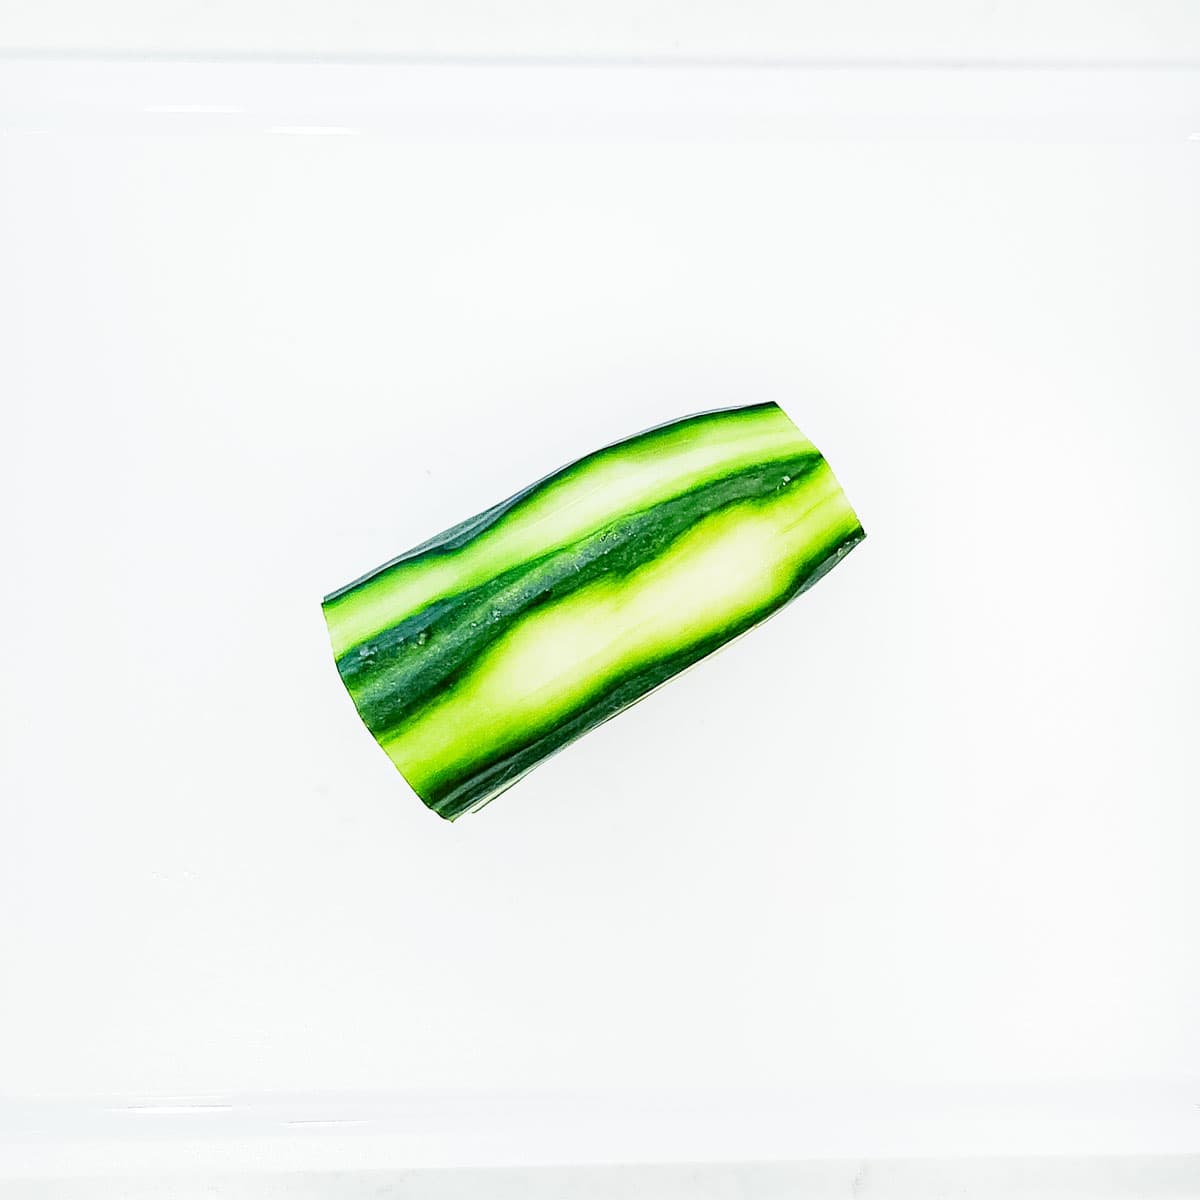 A peeled English cucumber.